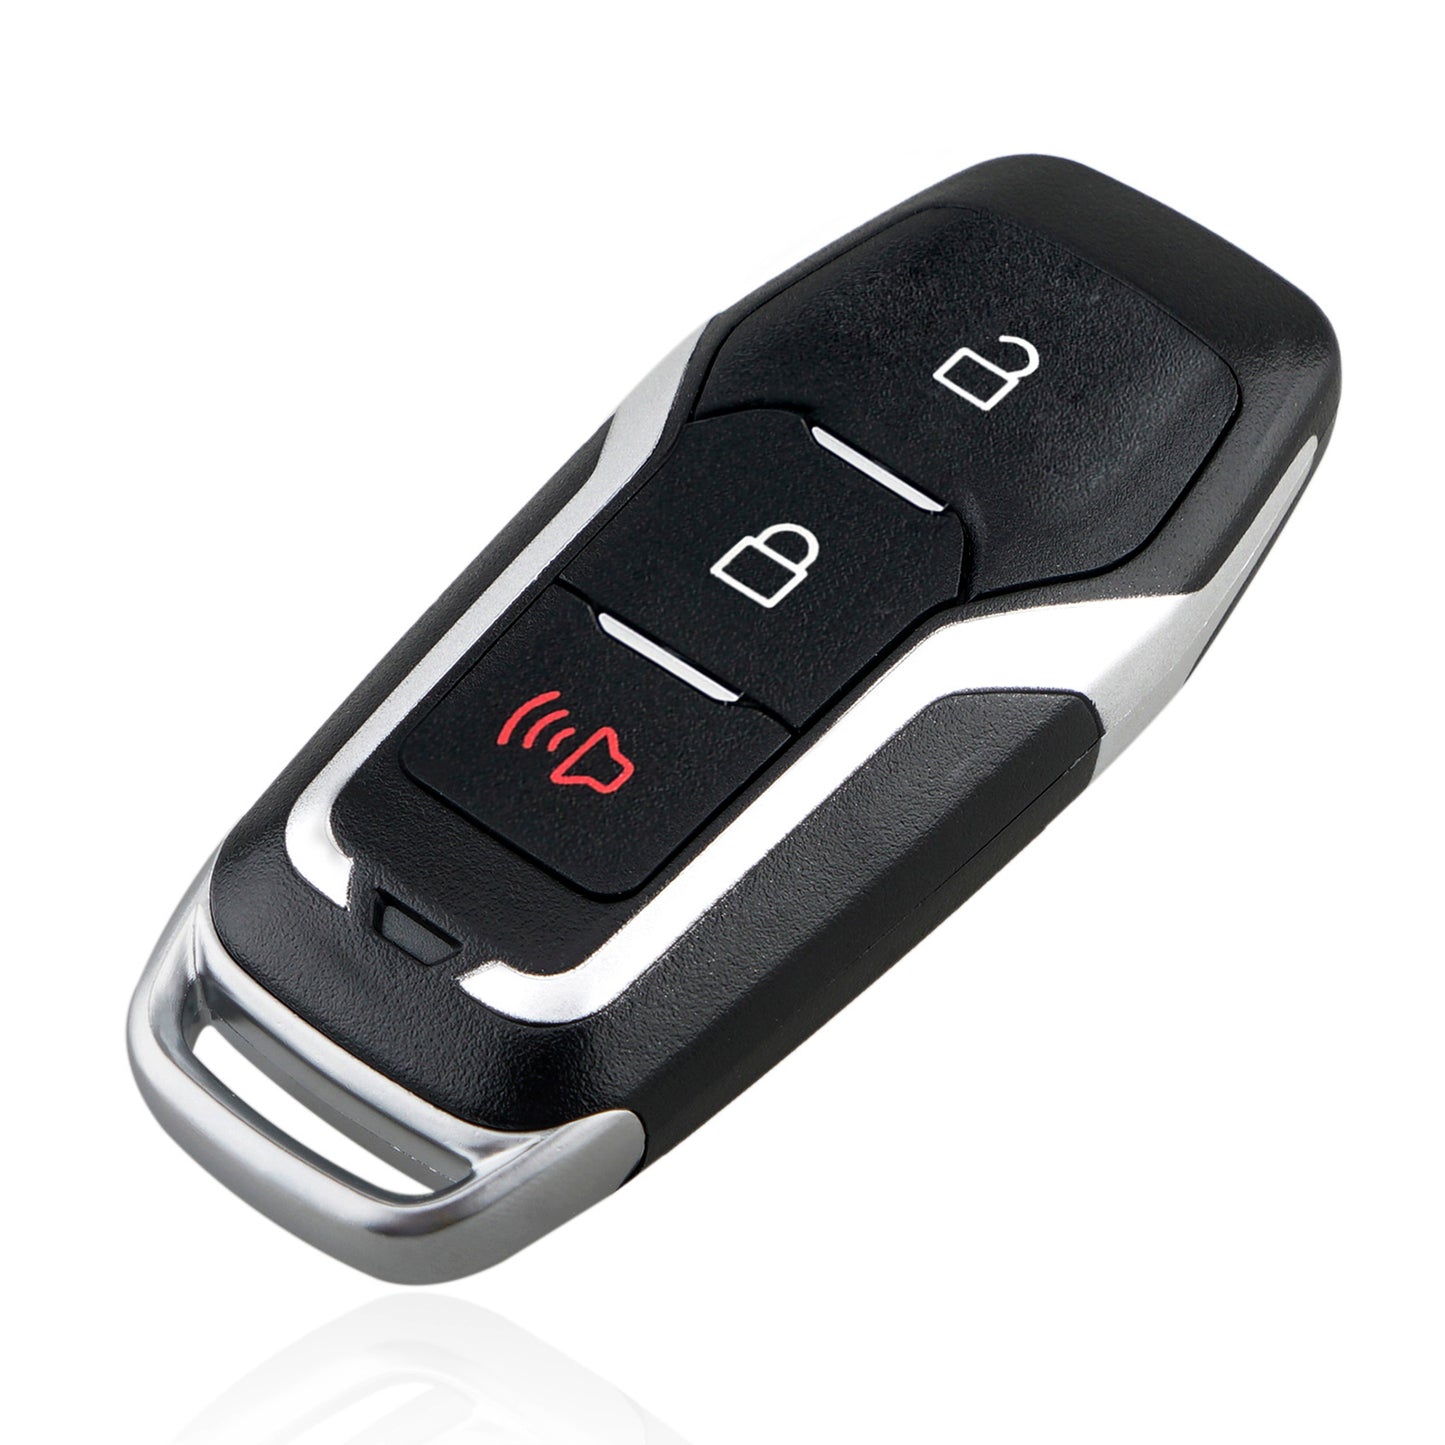 3 Buttons 315MHz Keyless Entry Fob Remote Car Key For 2015 - 2017 Ford F-150 FCC ID:M3N-A2C31243800 SKU : J972